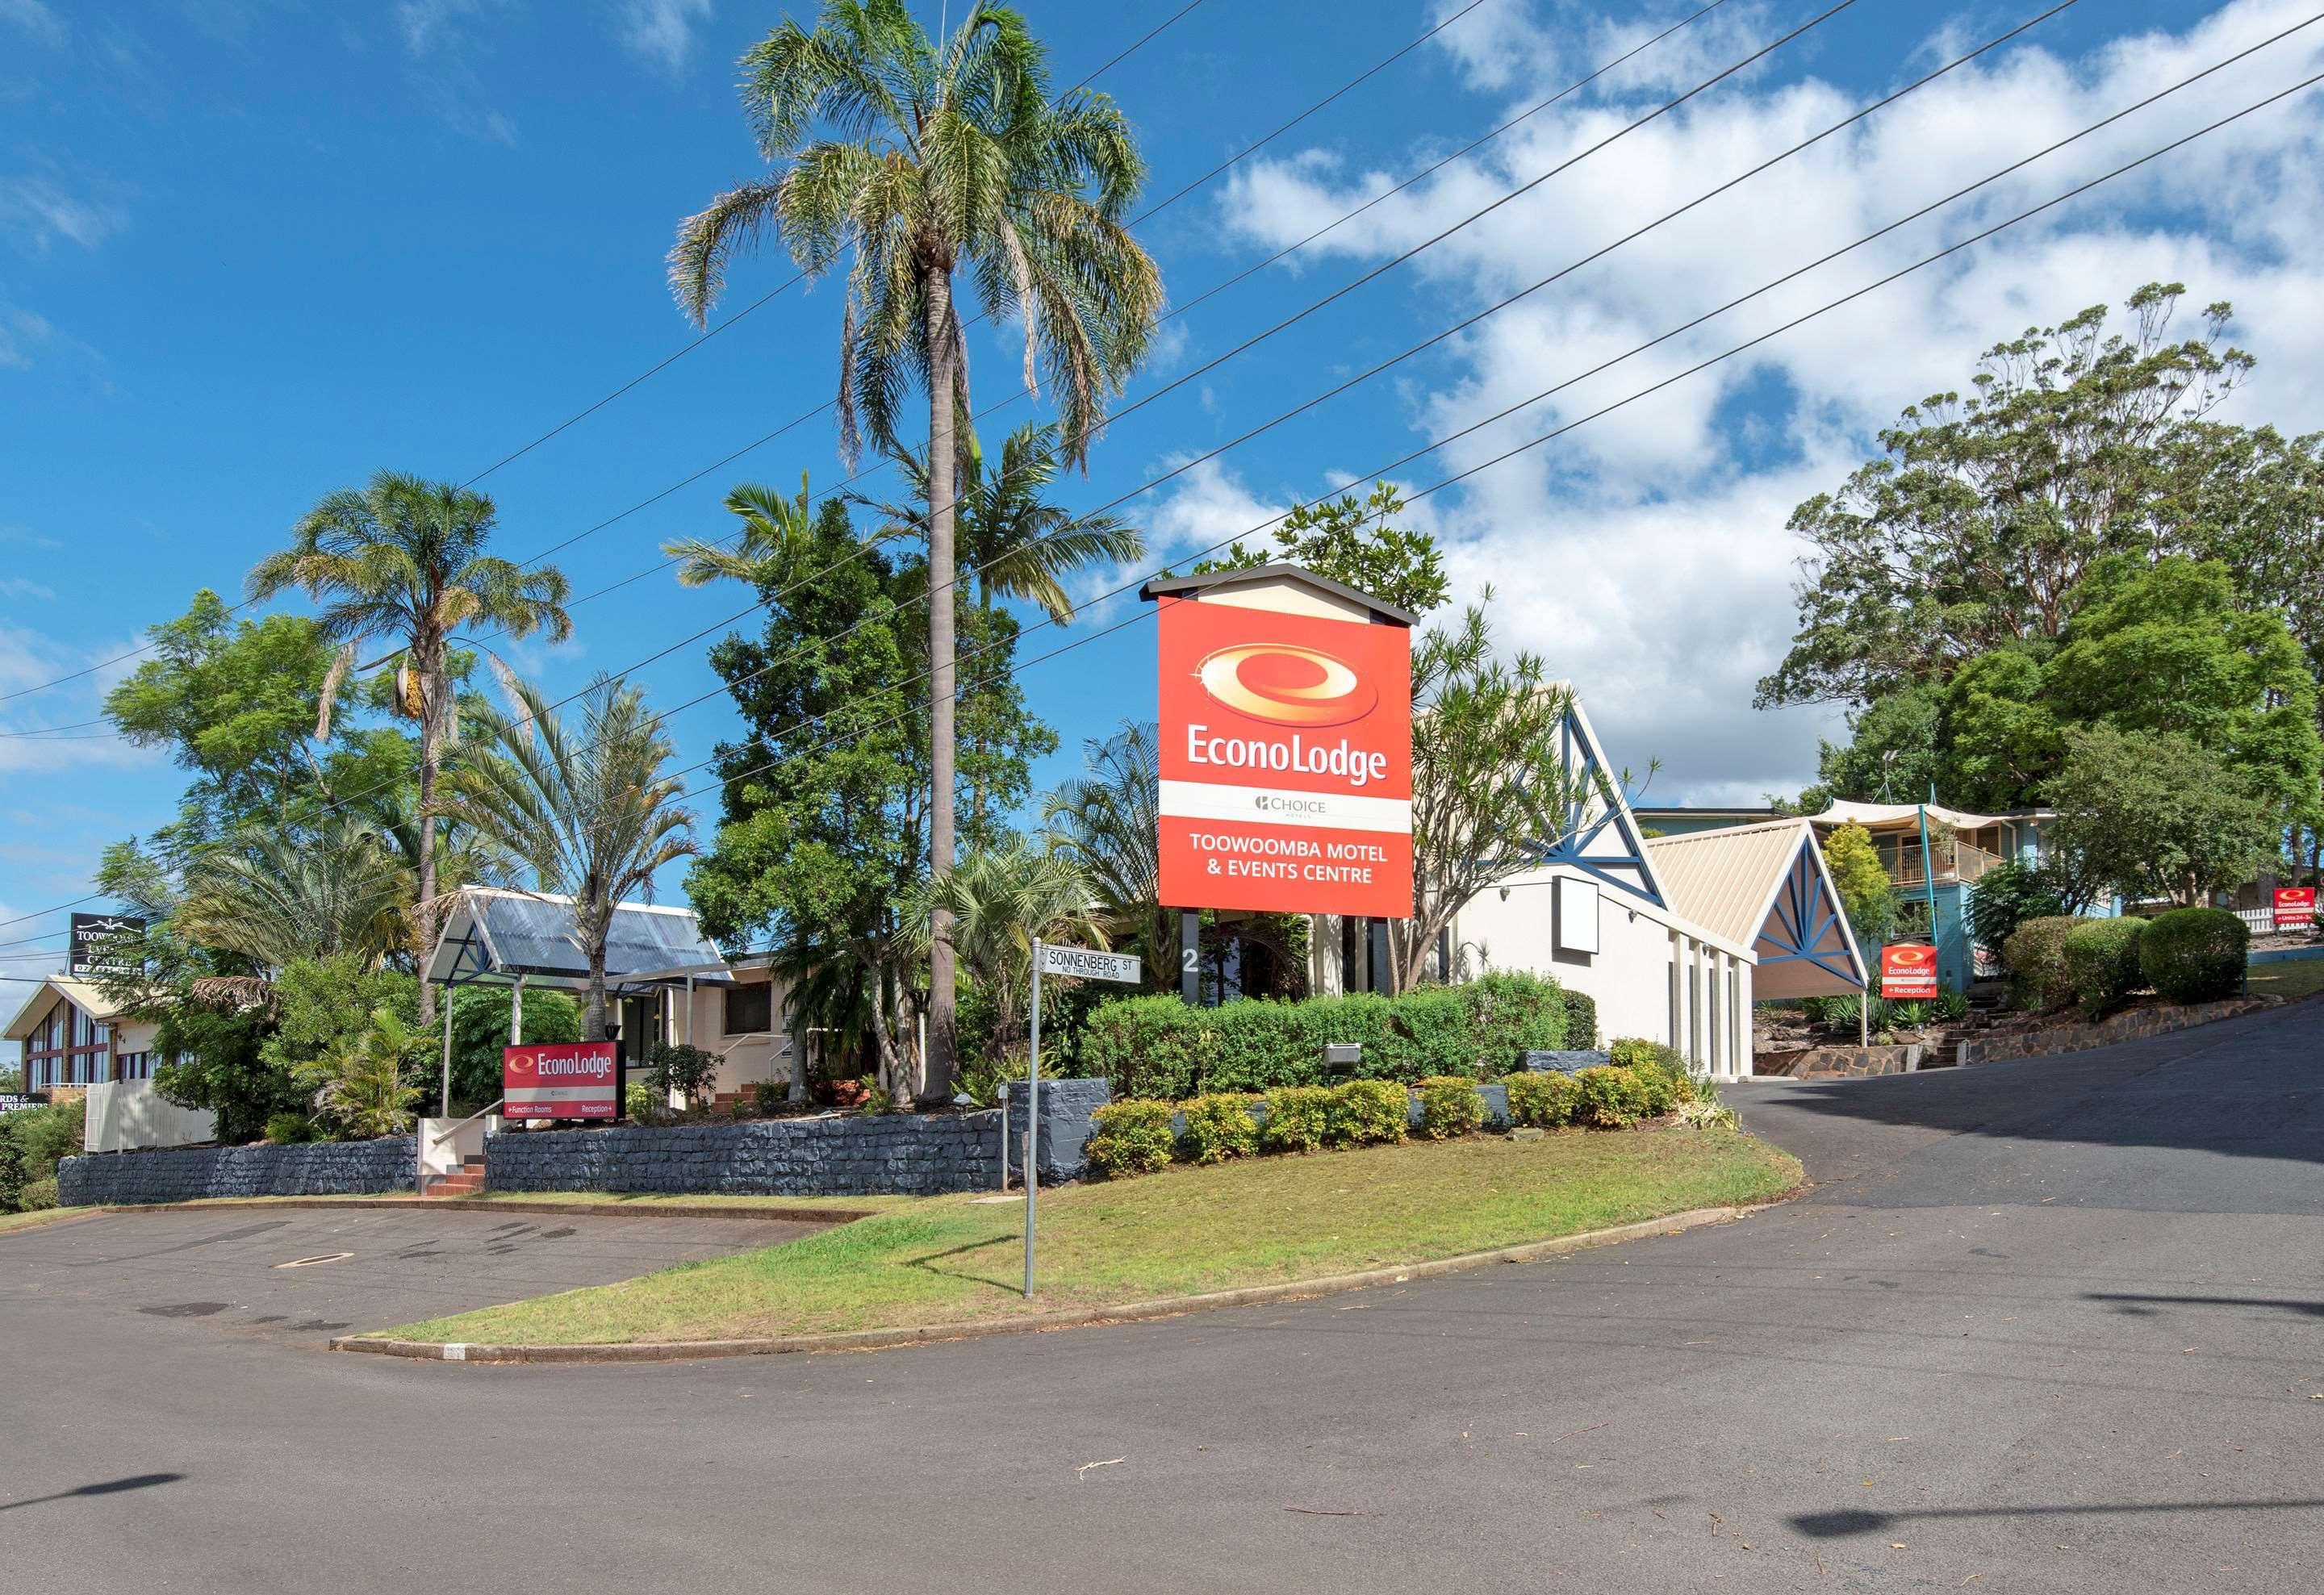 Toowoomba Motel & Events Centre Exterior foto